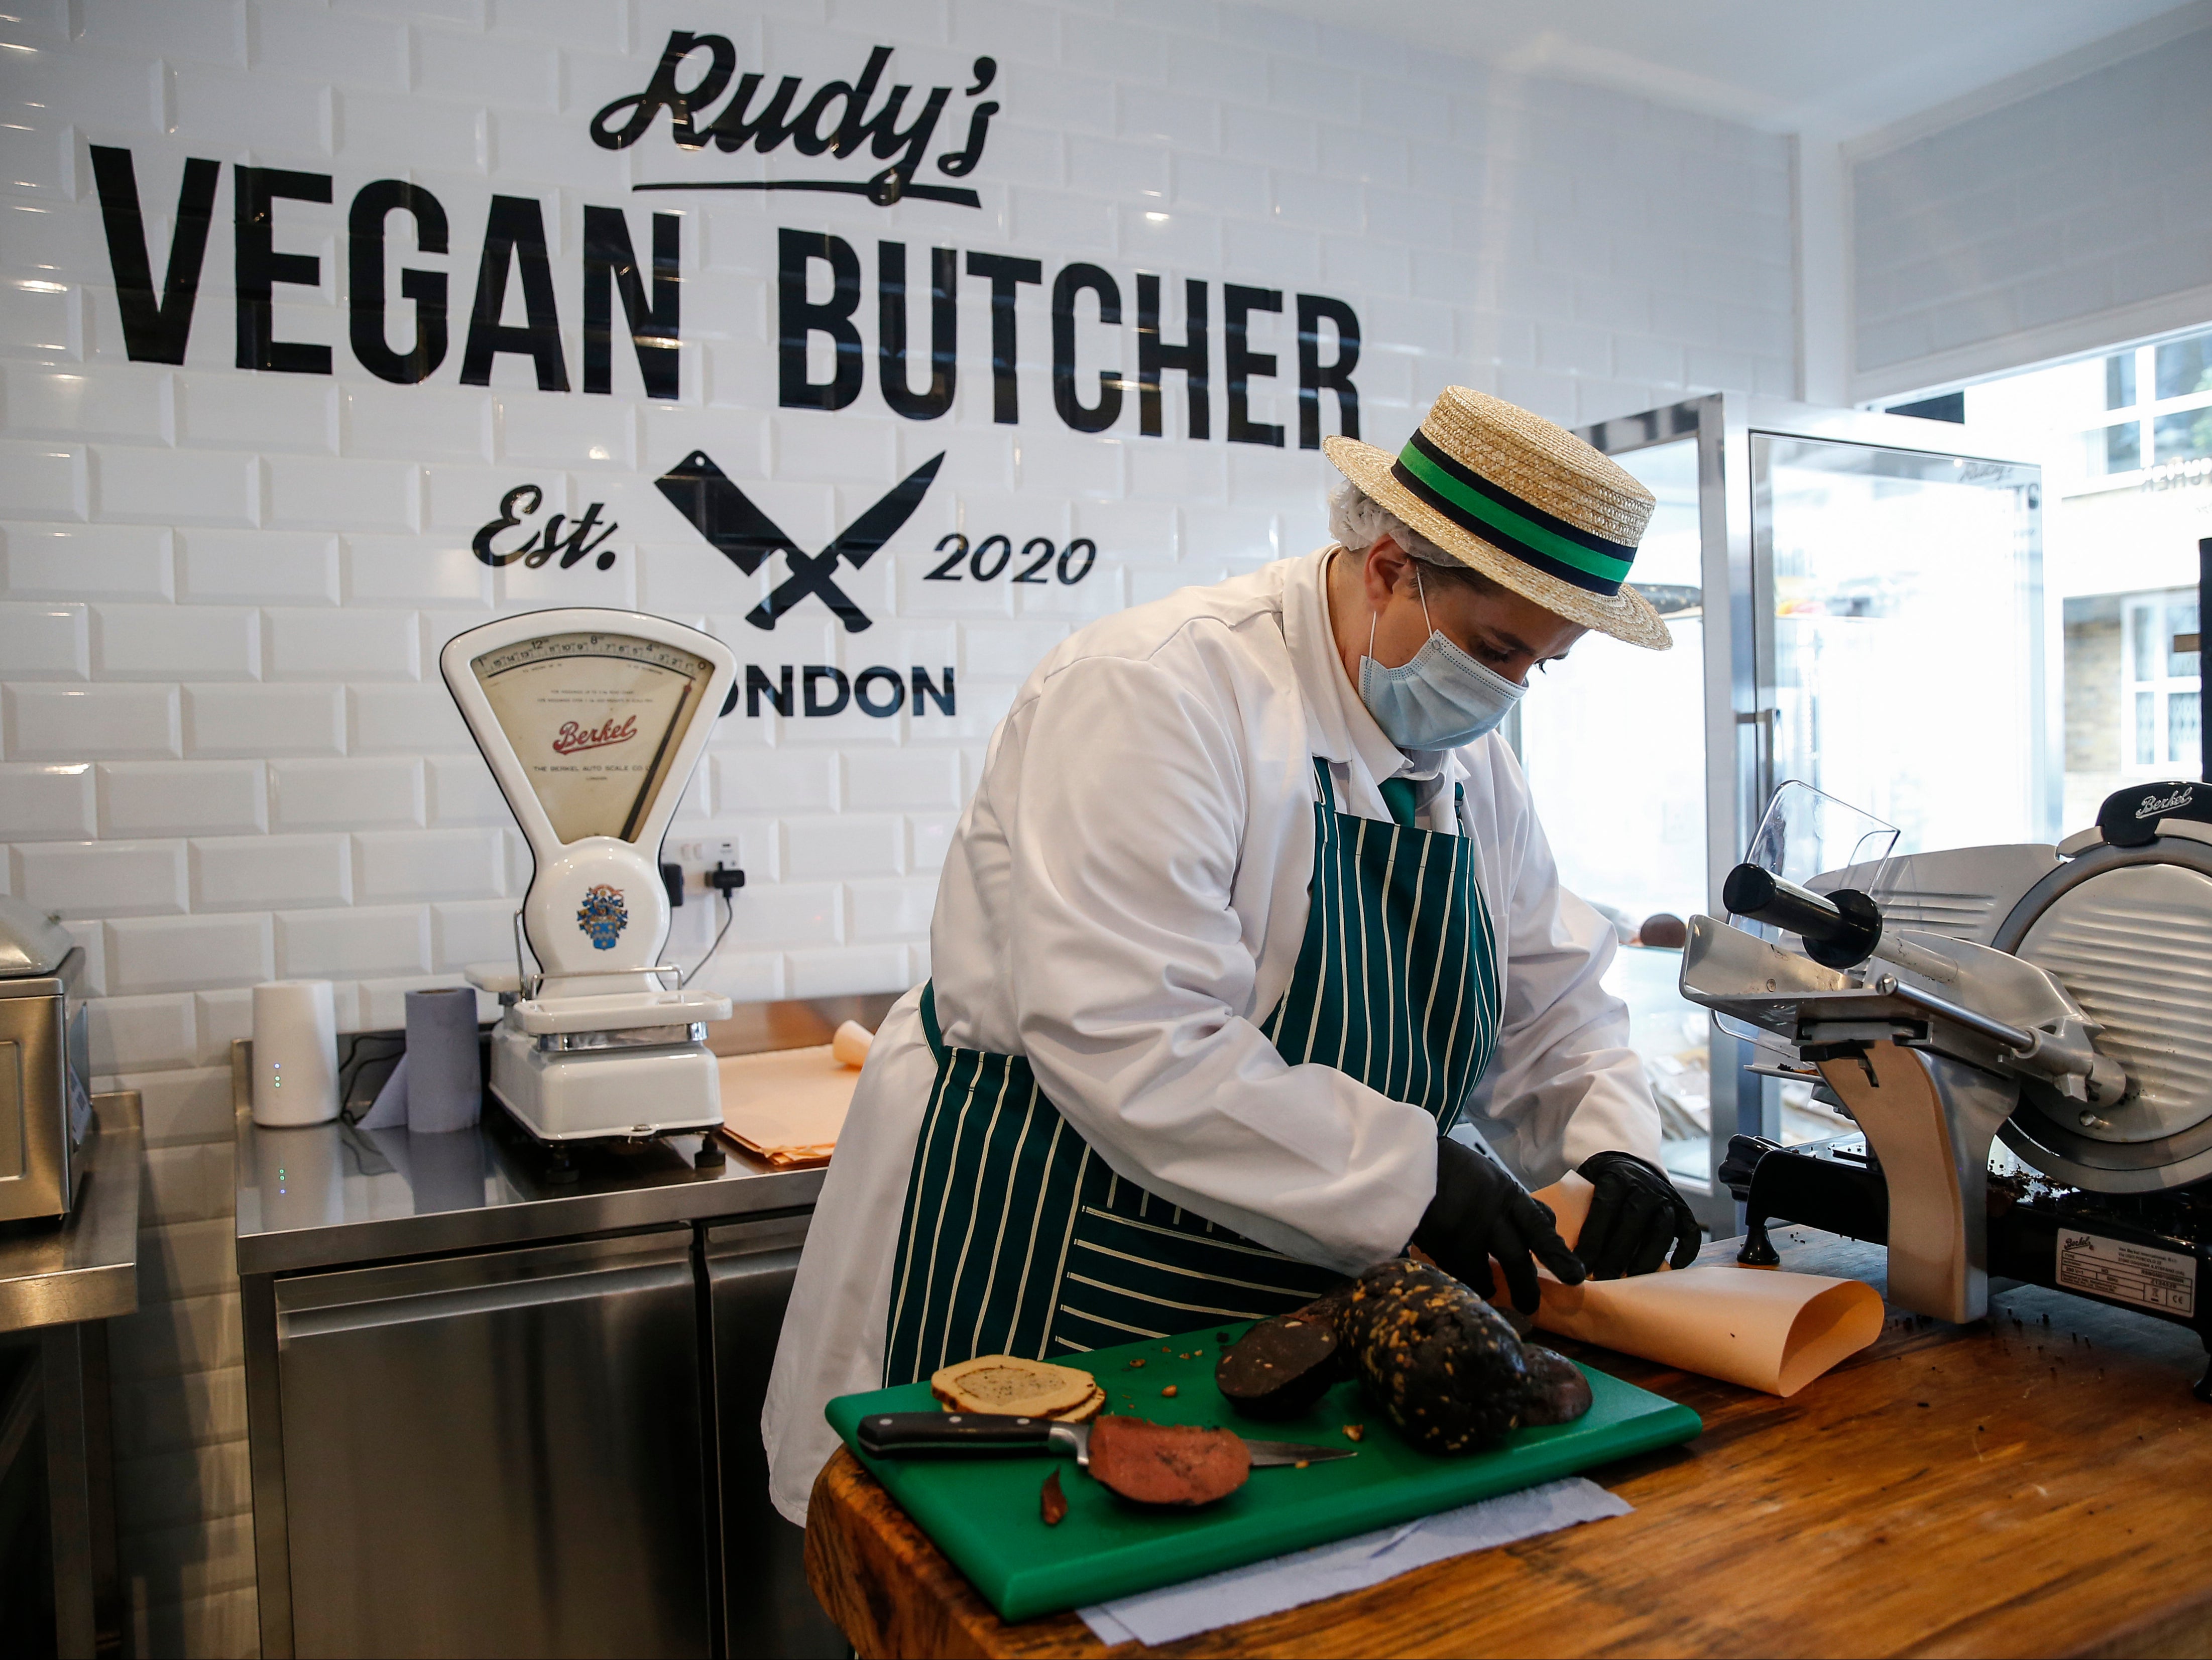 Rudy’s Vegan Butcher in London